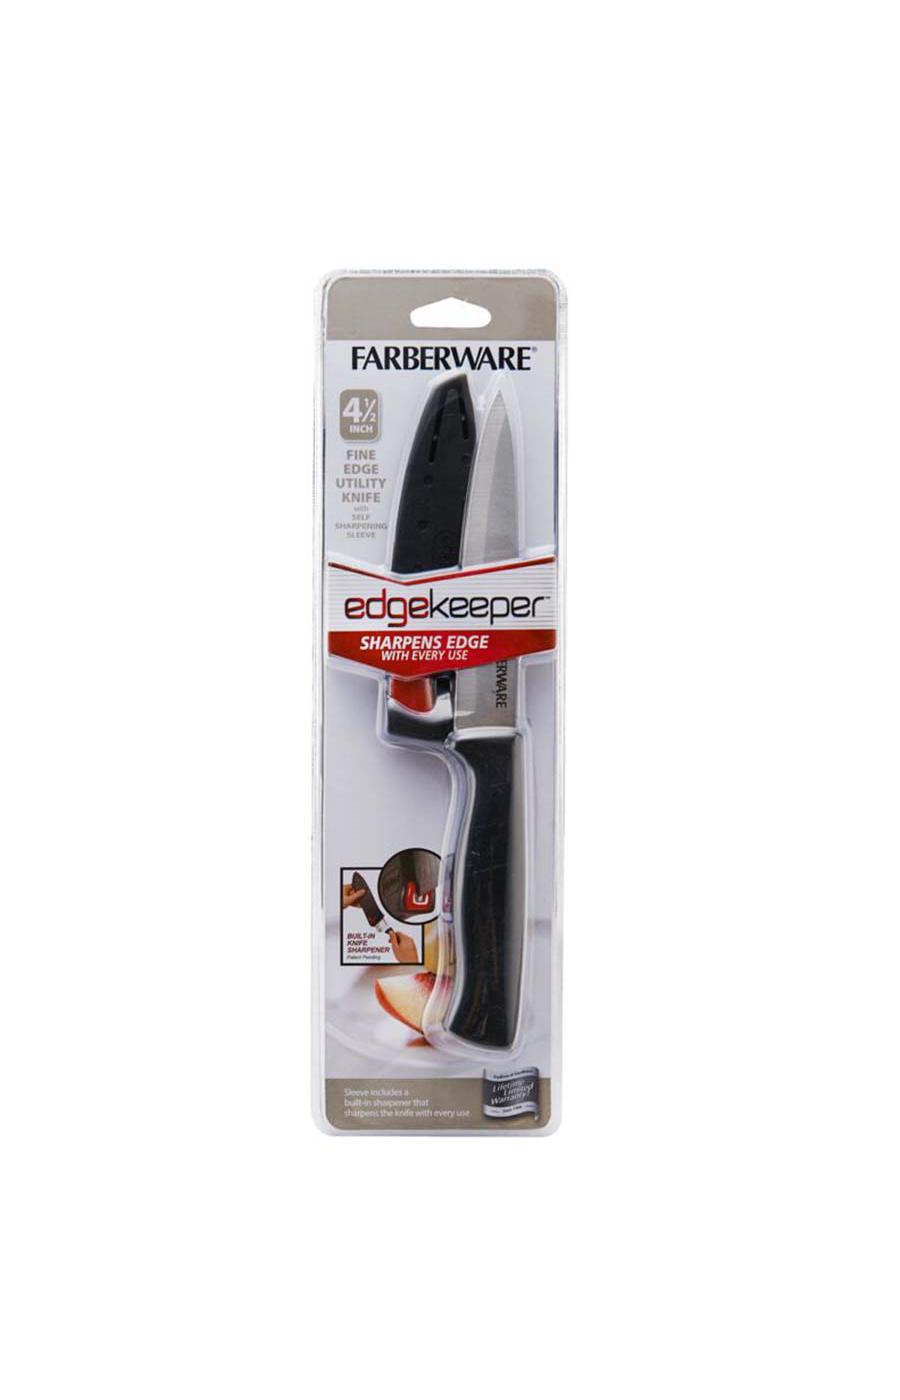 Farberware Soft Grips Set Of 4 Tools